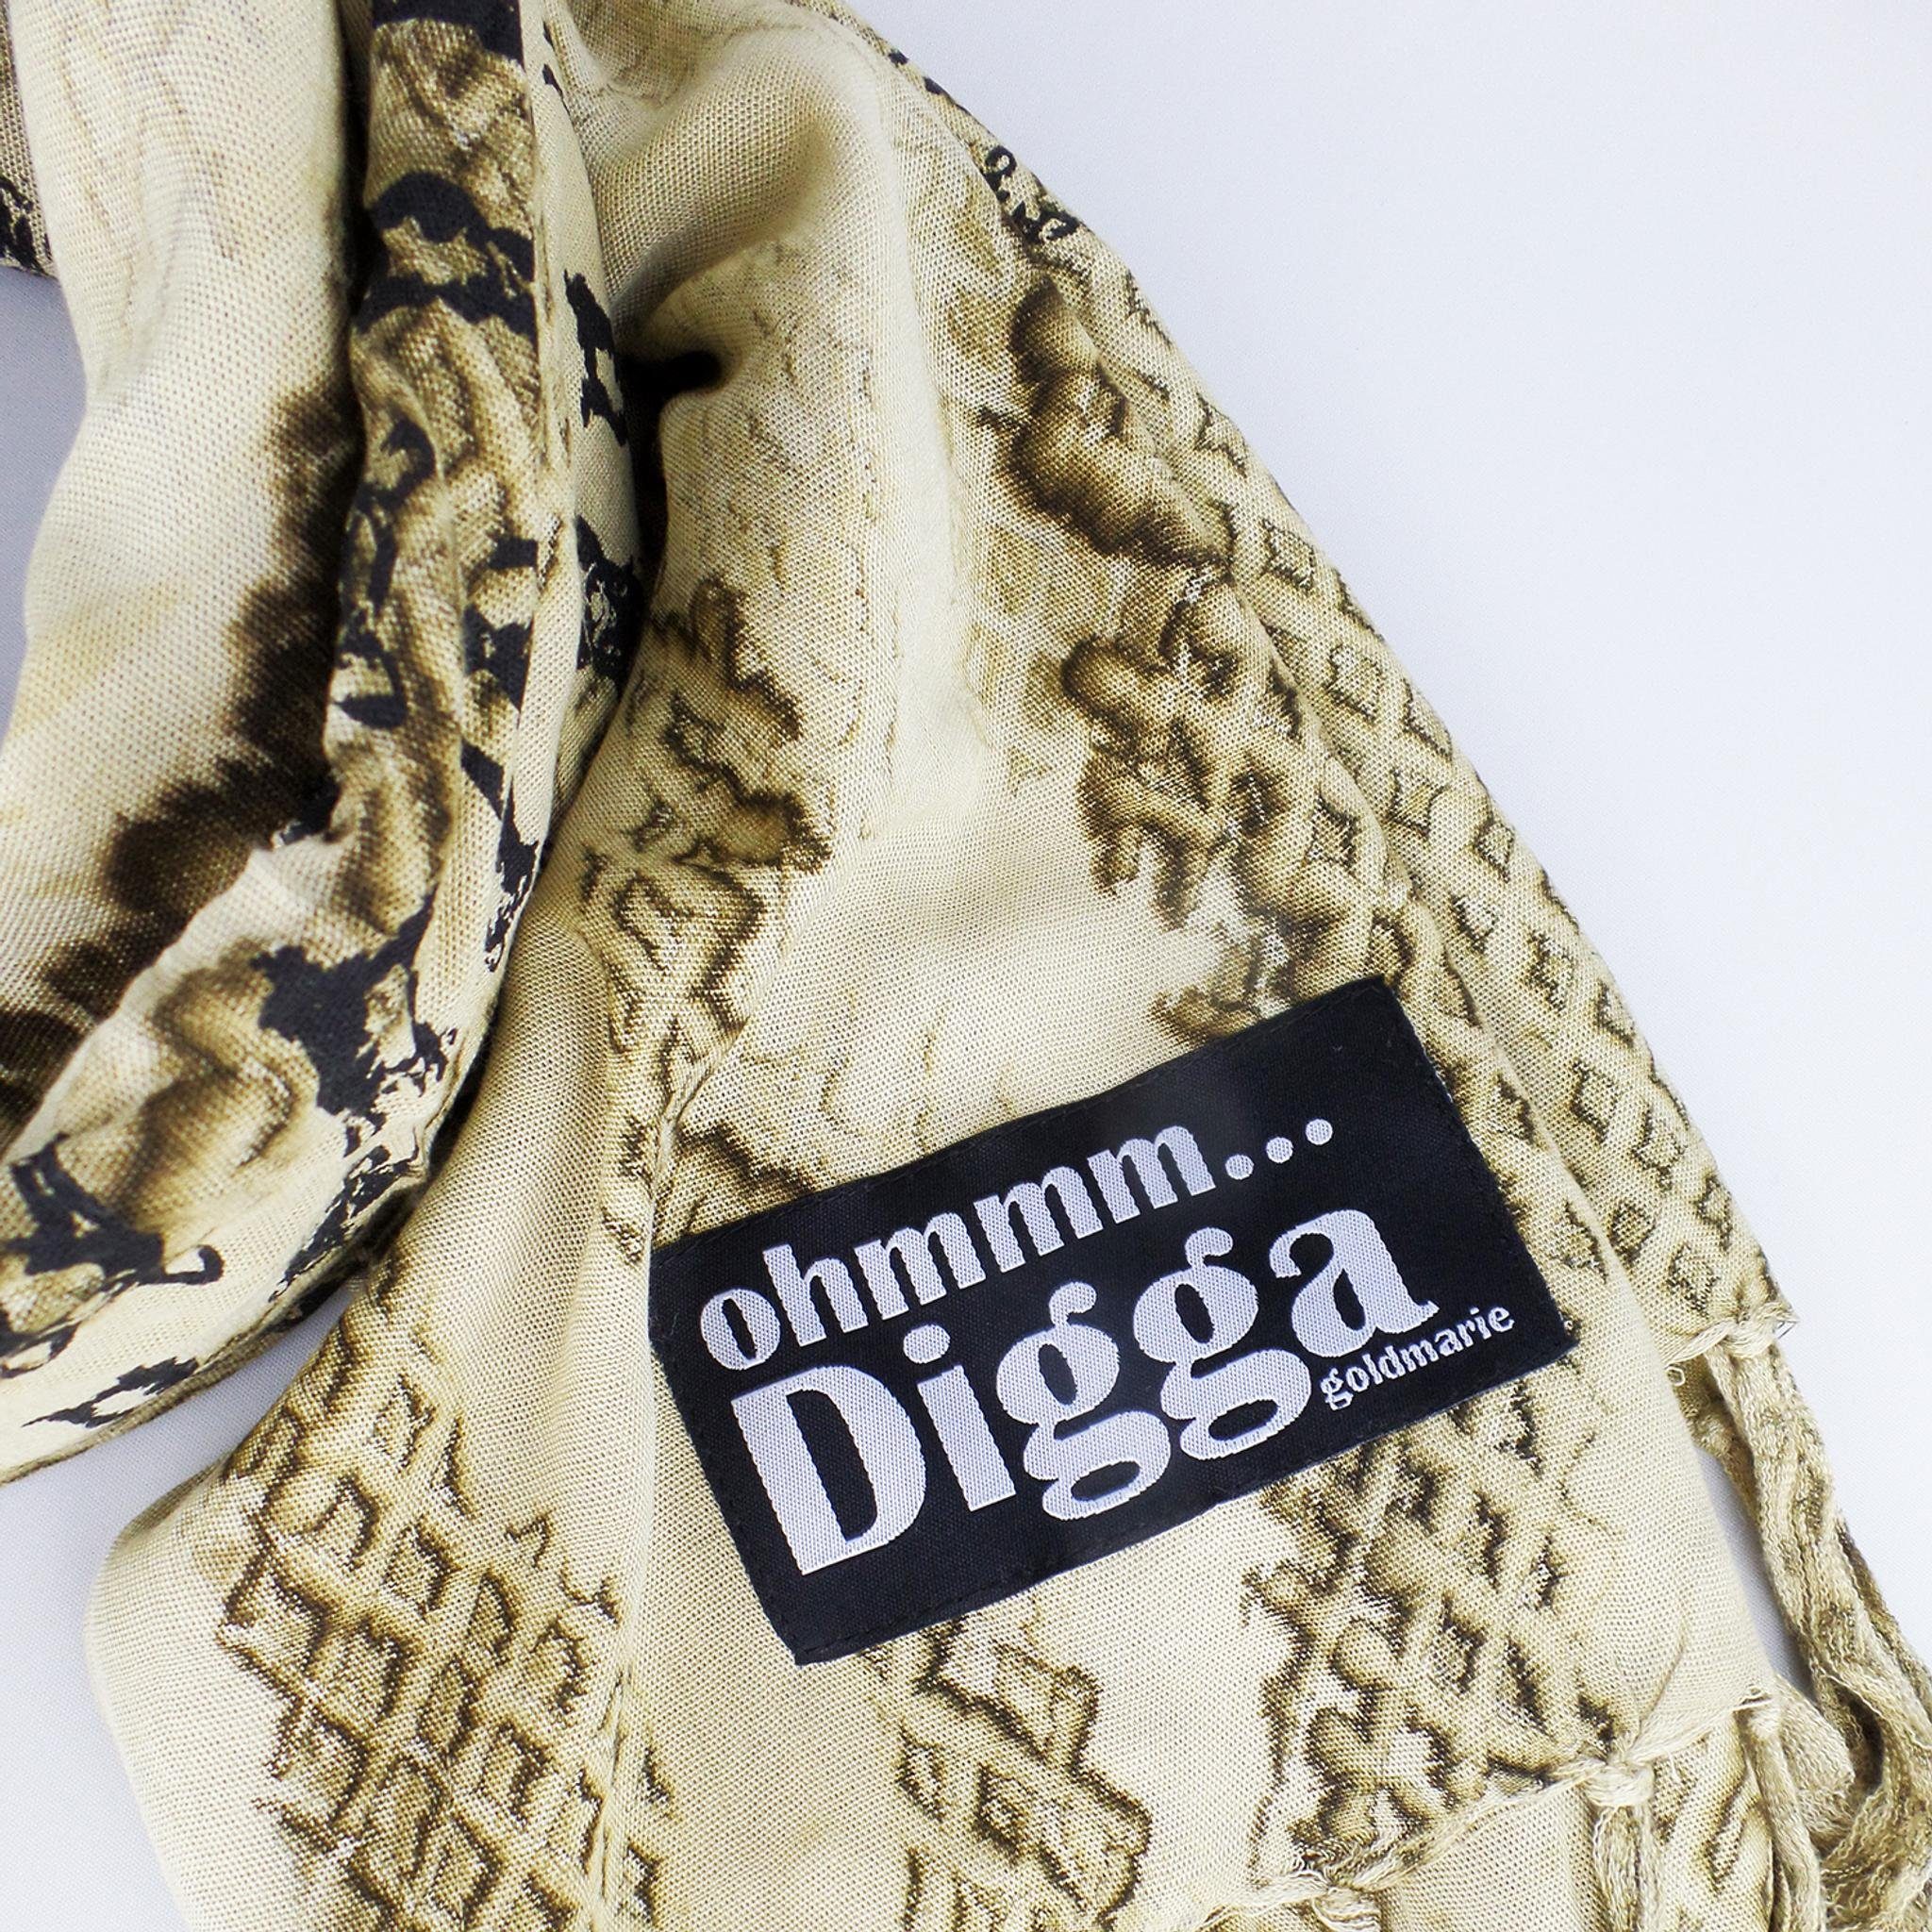 Bulldogge Muster Fransen goldmarie khaki-schwarz, Halstuch DIGGA OHMMM Mix mit Animalprint